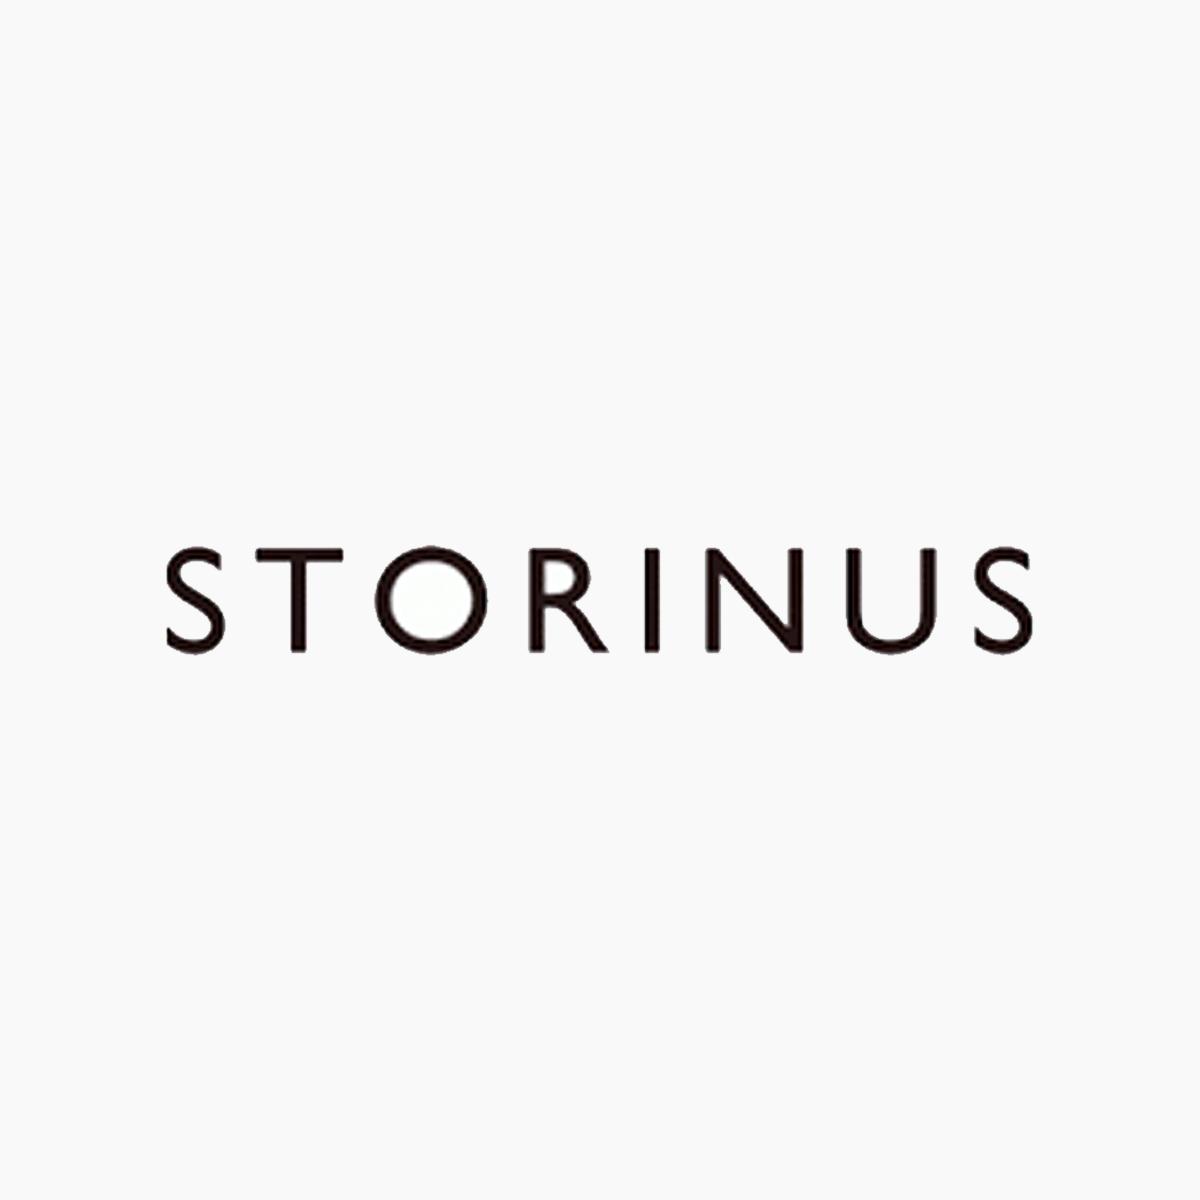 Storinus